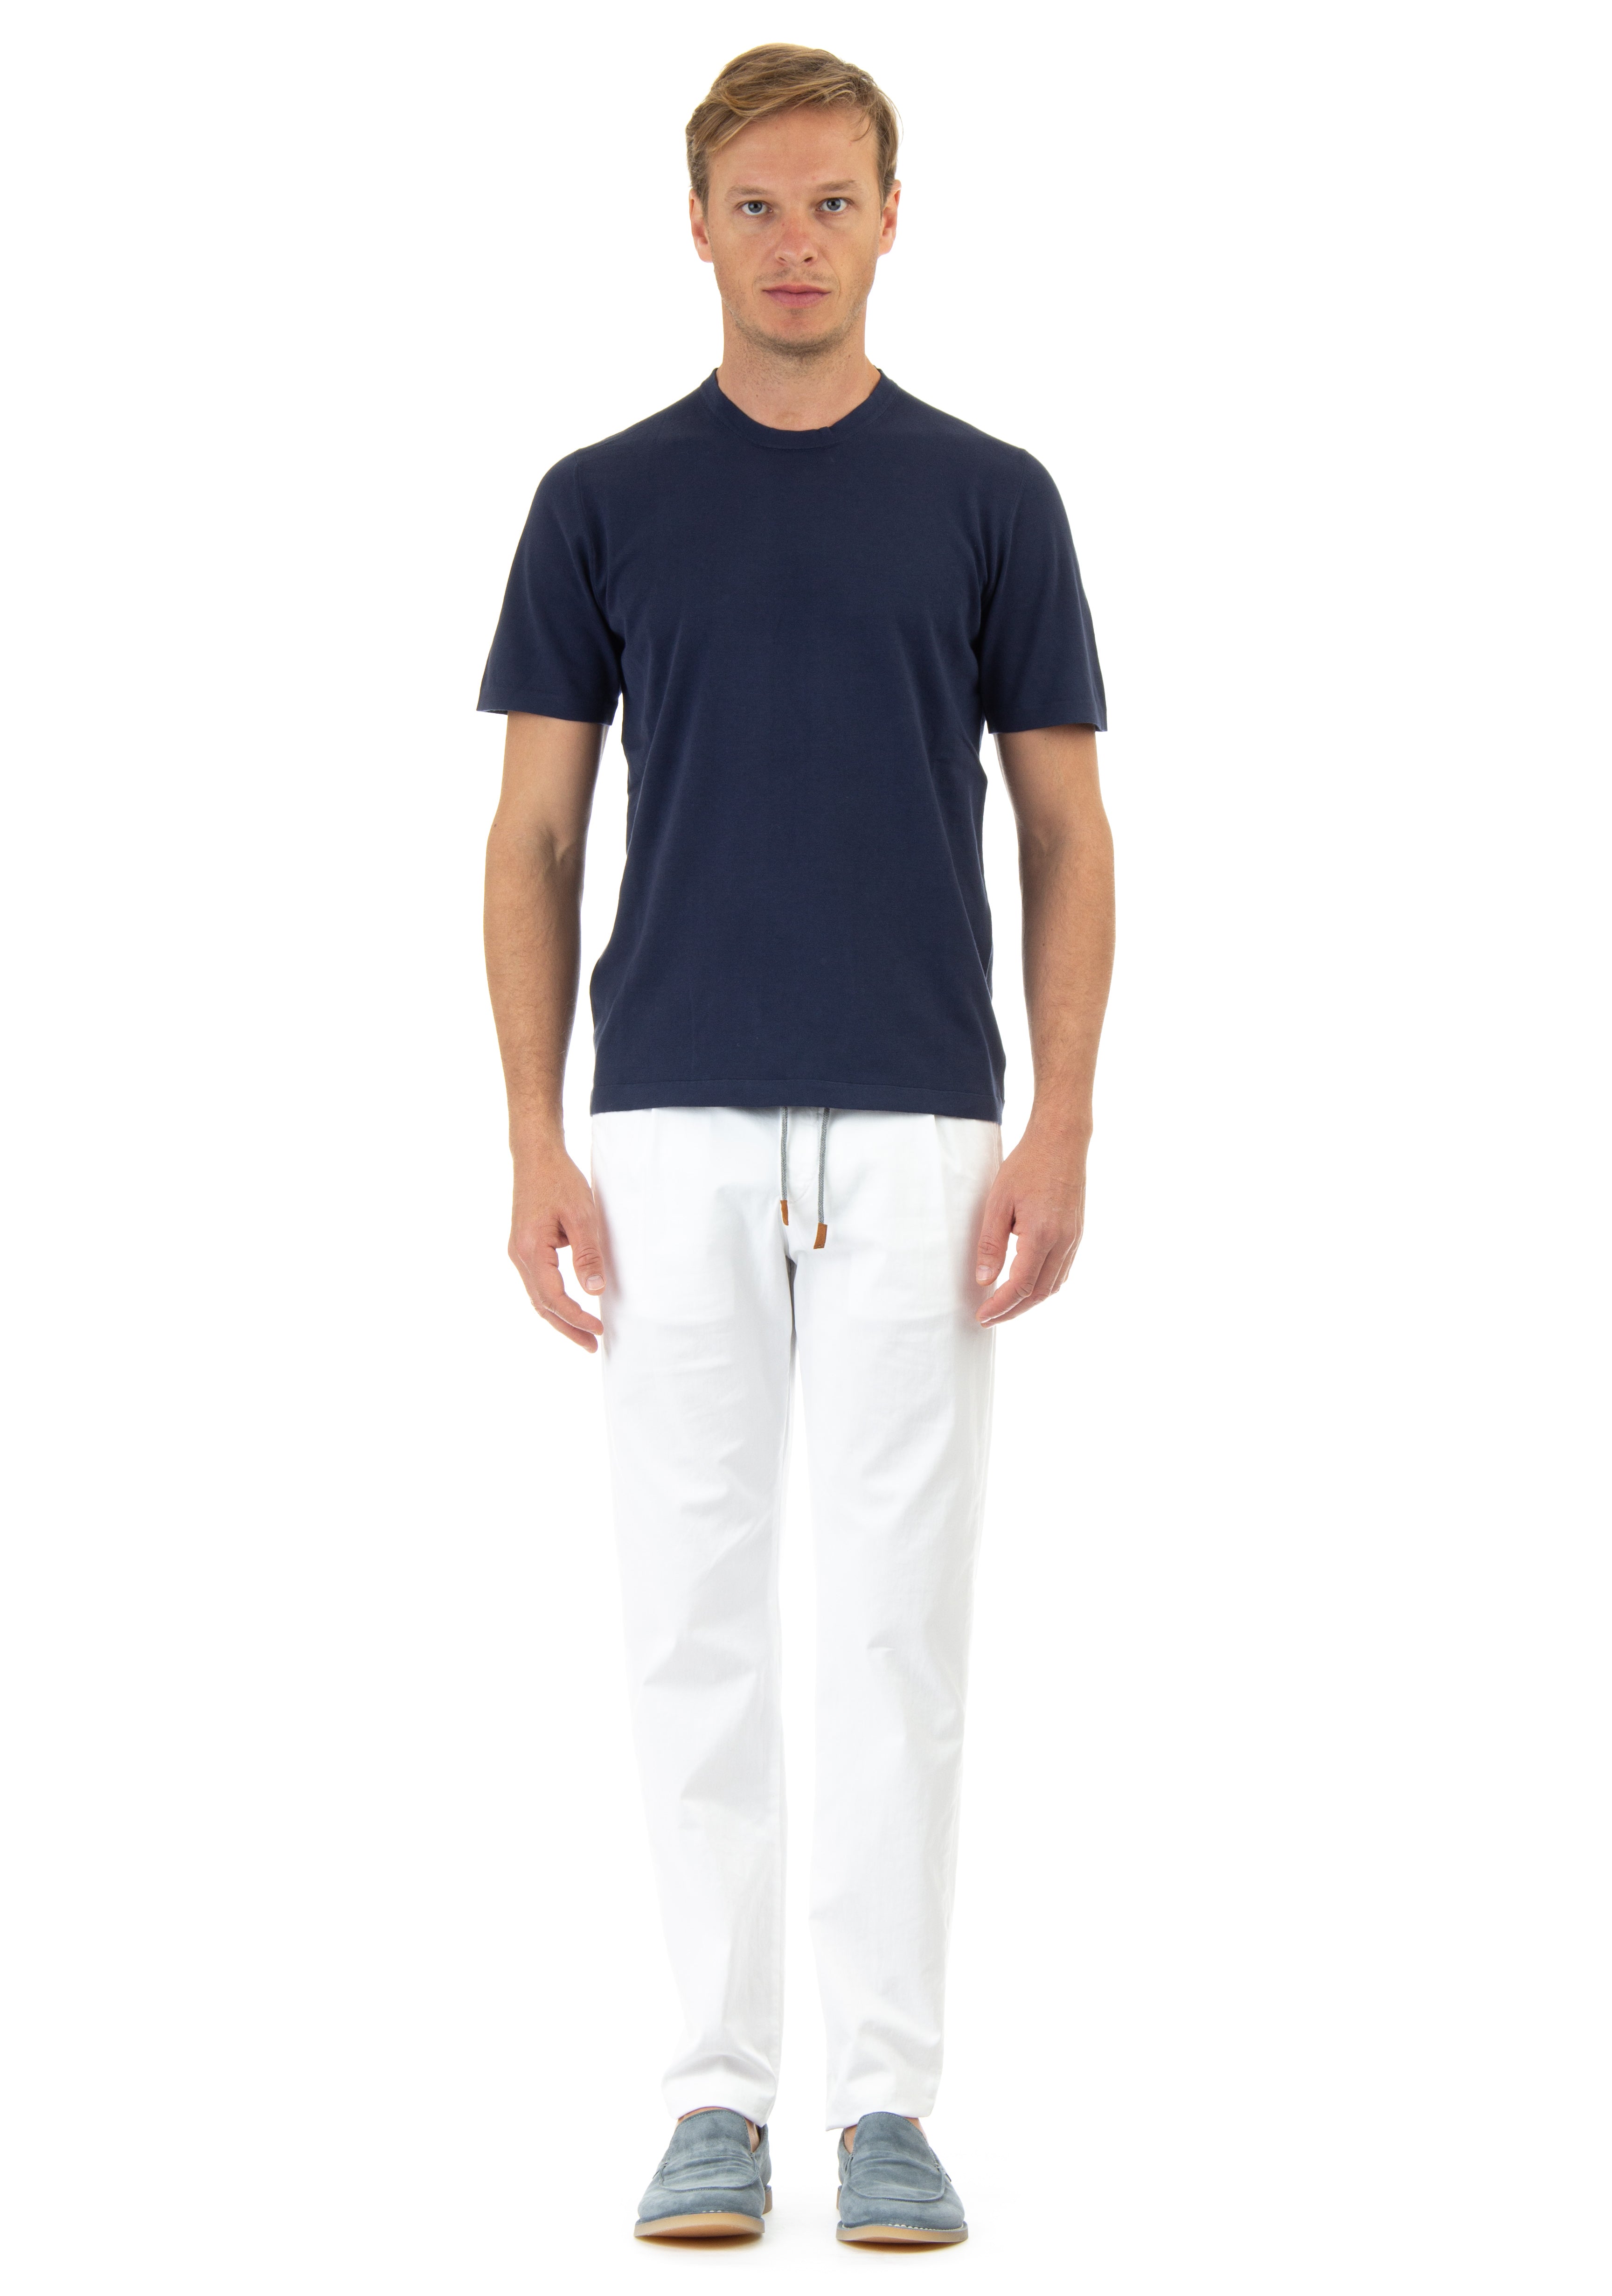 Lightweight giza45 superior cotton t-shirt